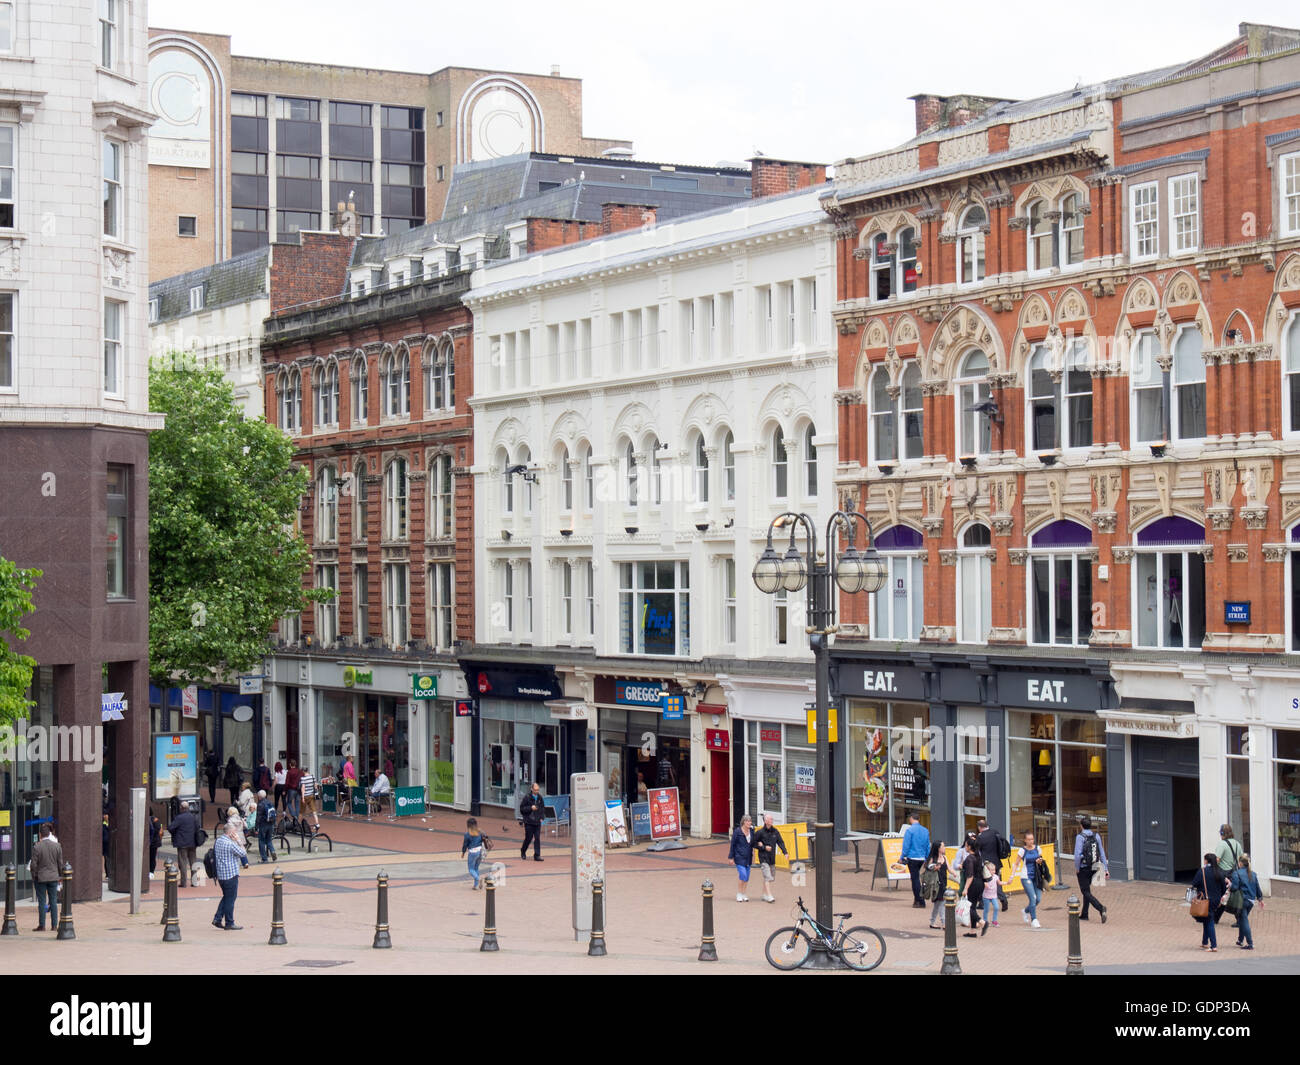 Victoria Square, Birmingham, looking down New Street. Stock Photo